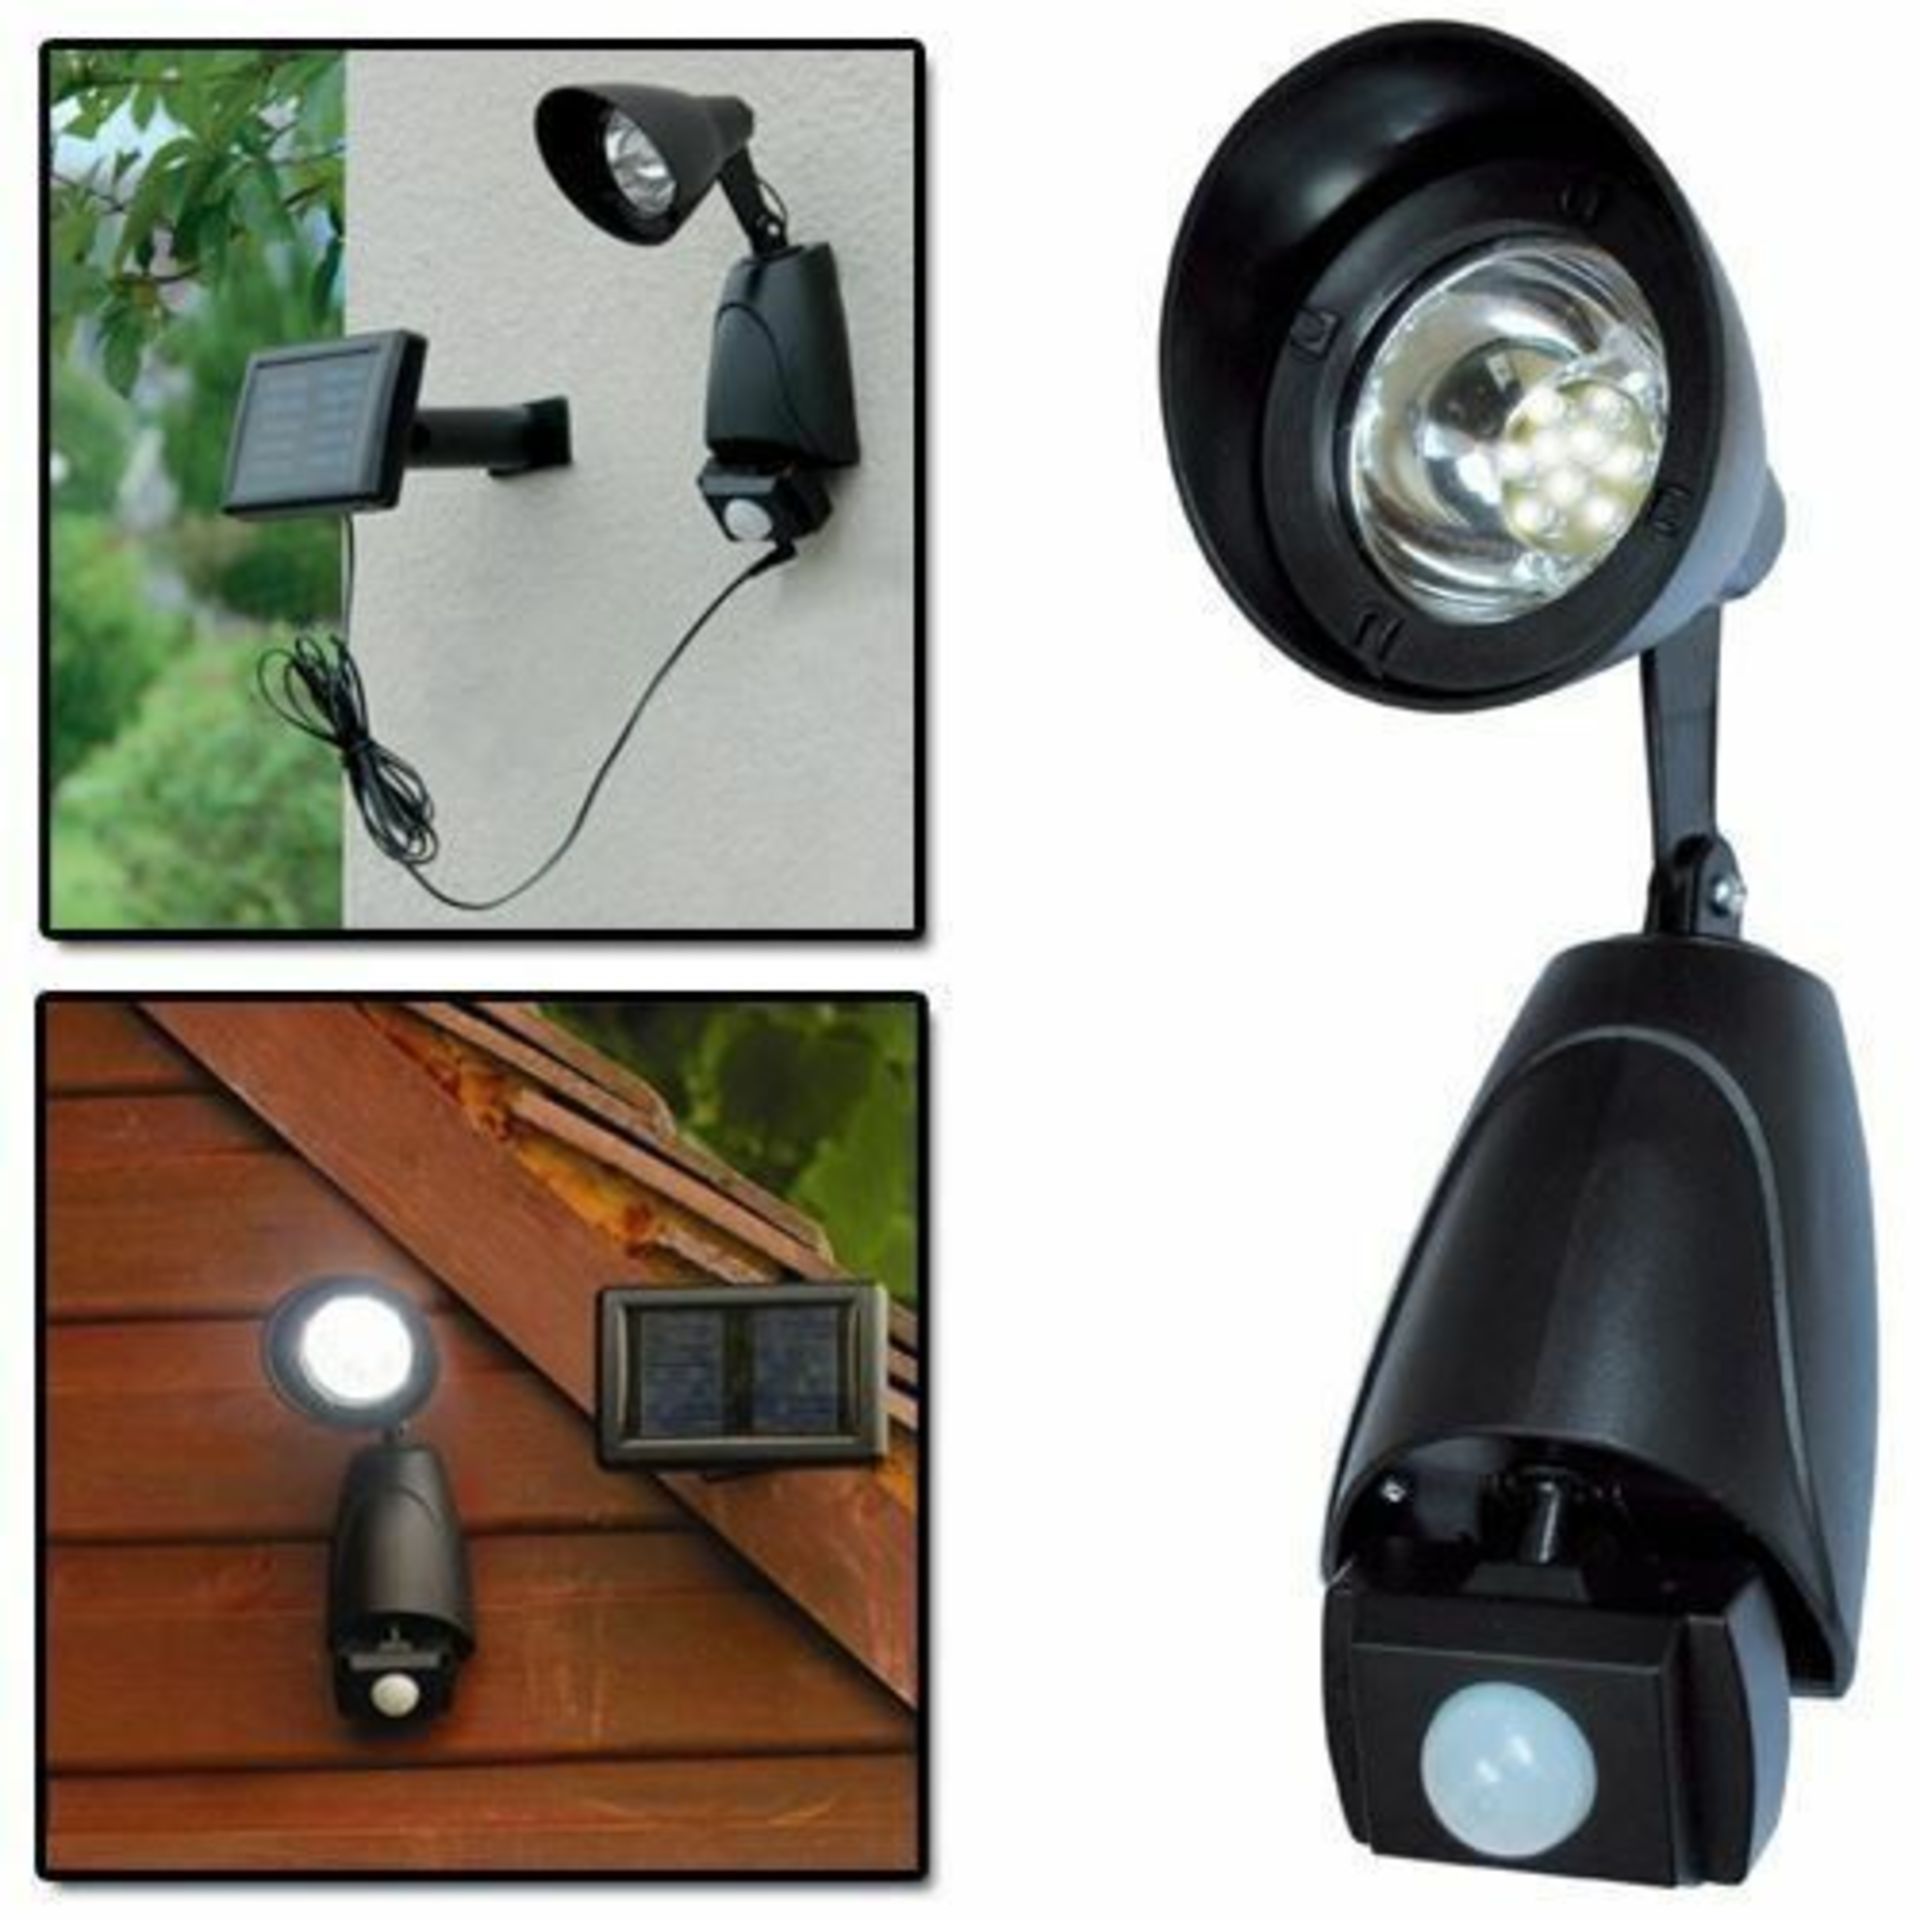 + VAT Brand New Kingfisher Security Light - Motion Sensor - Weatherproof - 9 Bright LED Bulbs